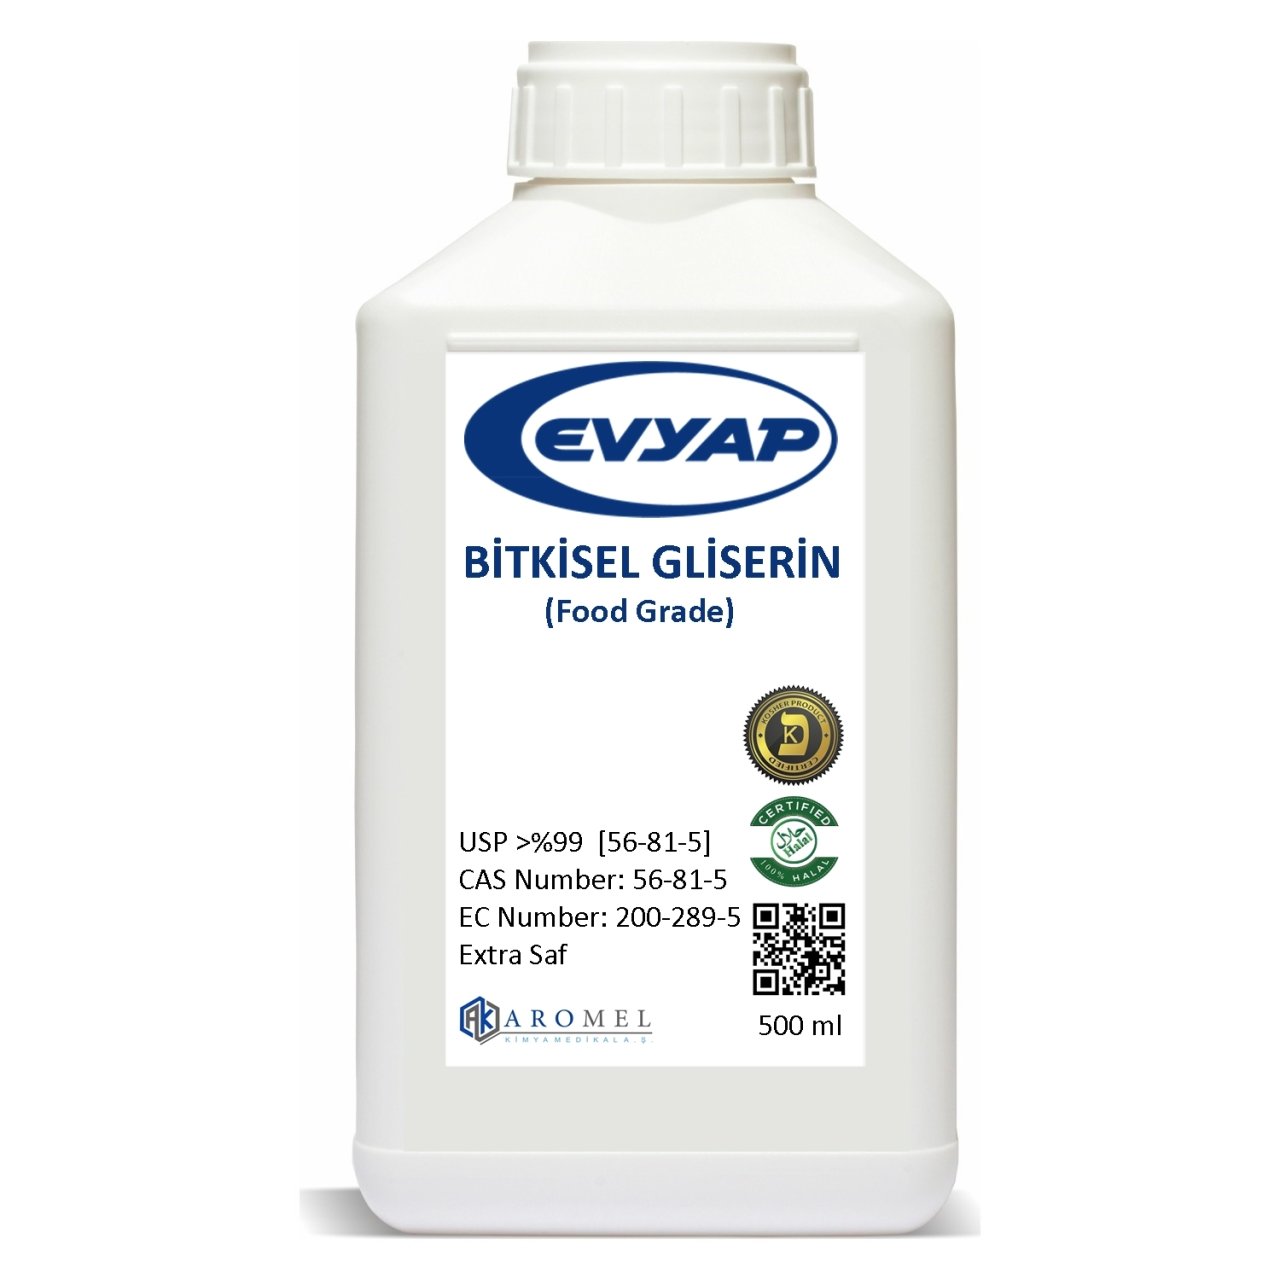 Evyap Bitkisel Gliserin l 500 ml l Gıda Tipi Yenilebilir l Helal